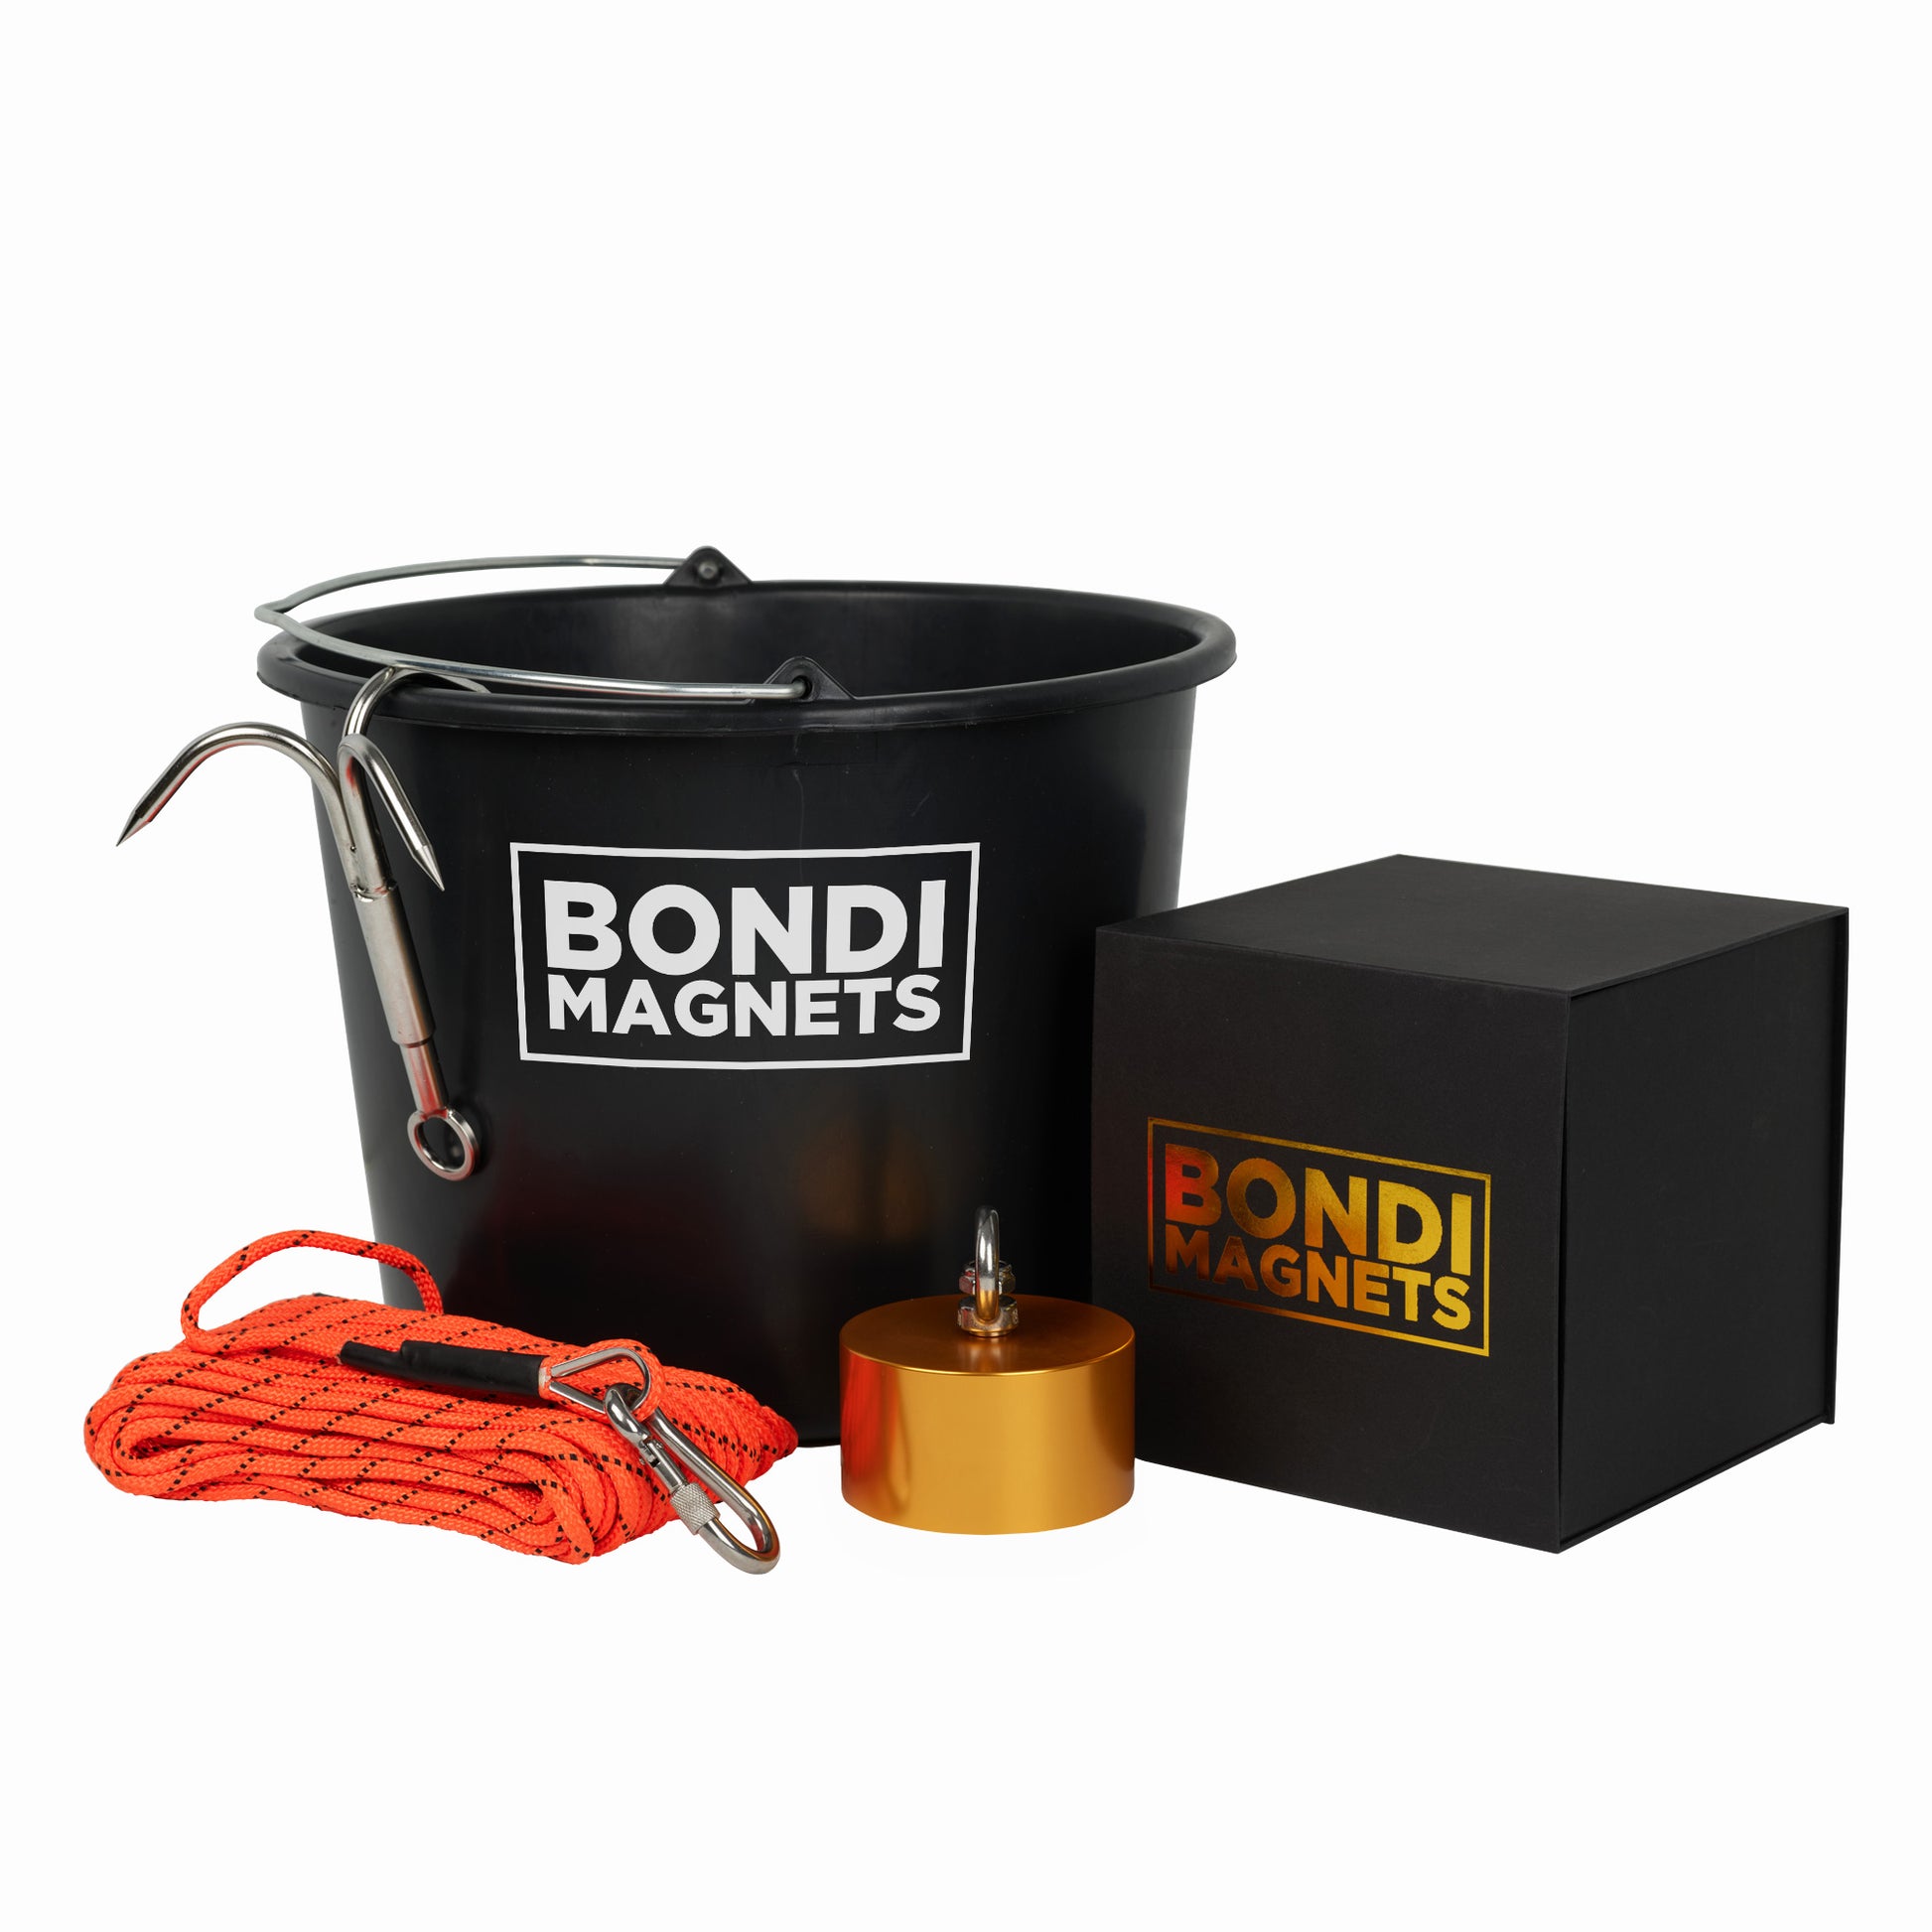 The El Dorado Magnet Fishing Kit – Bondi Magnets, specially made